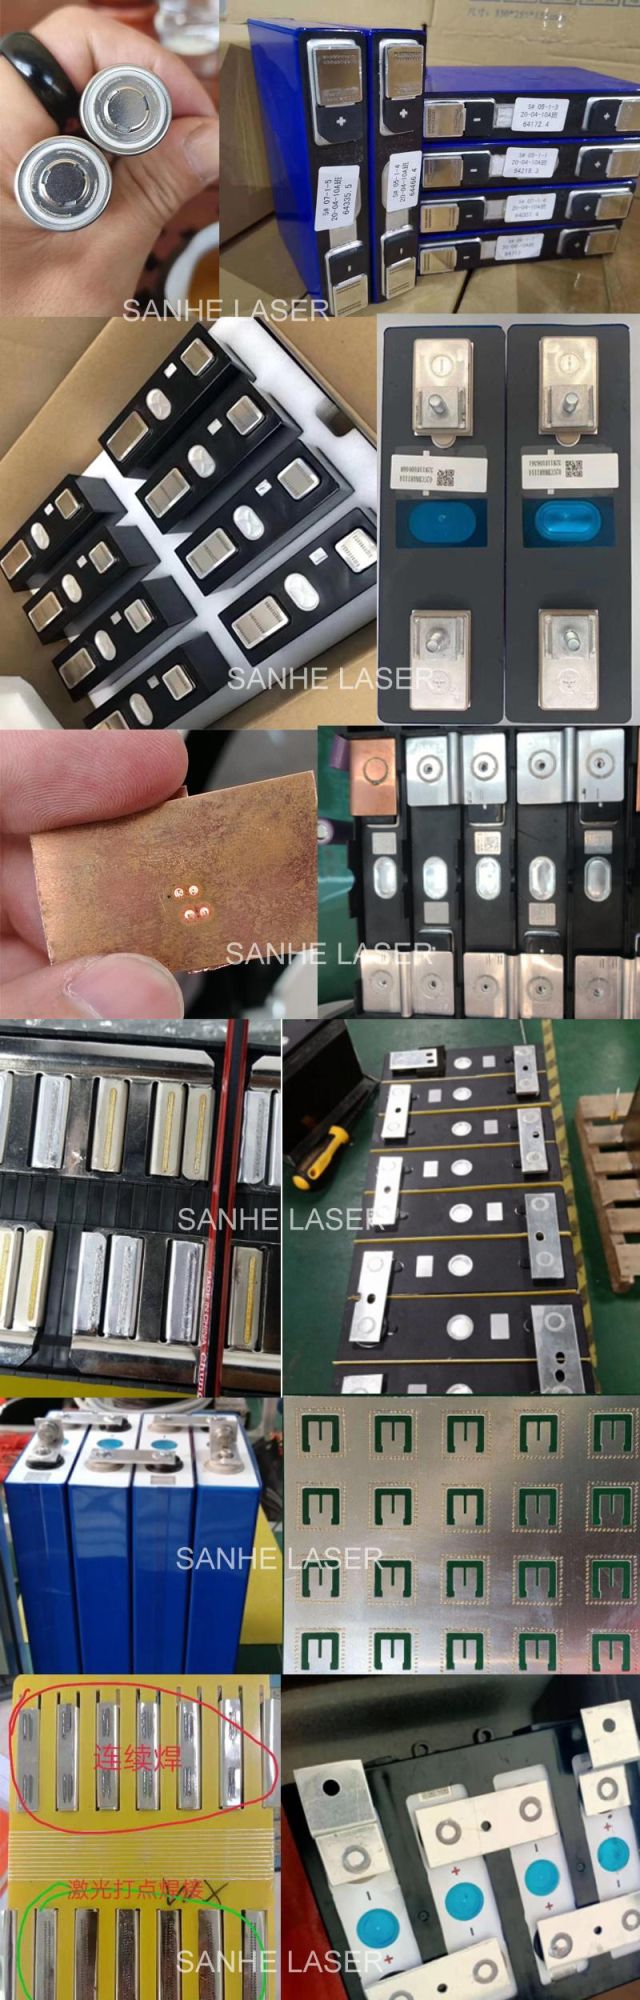 Factory Price Lithium Battery Fiber Laser Welding Machine for Aluminium Nickle Battery Pack